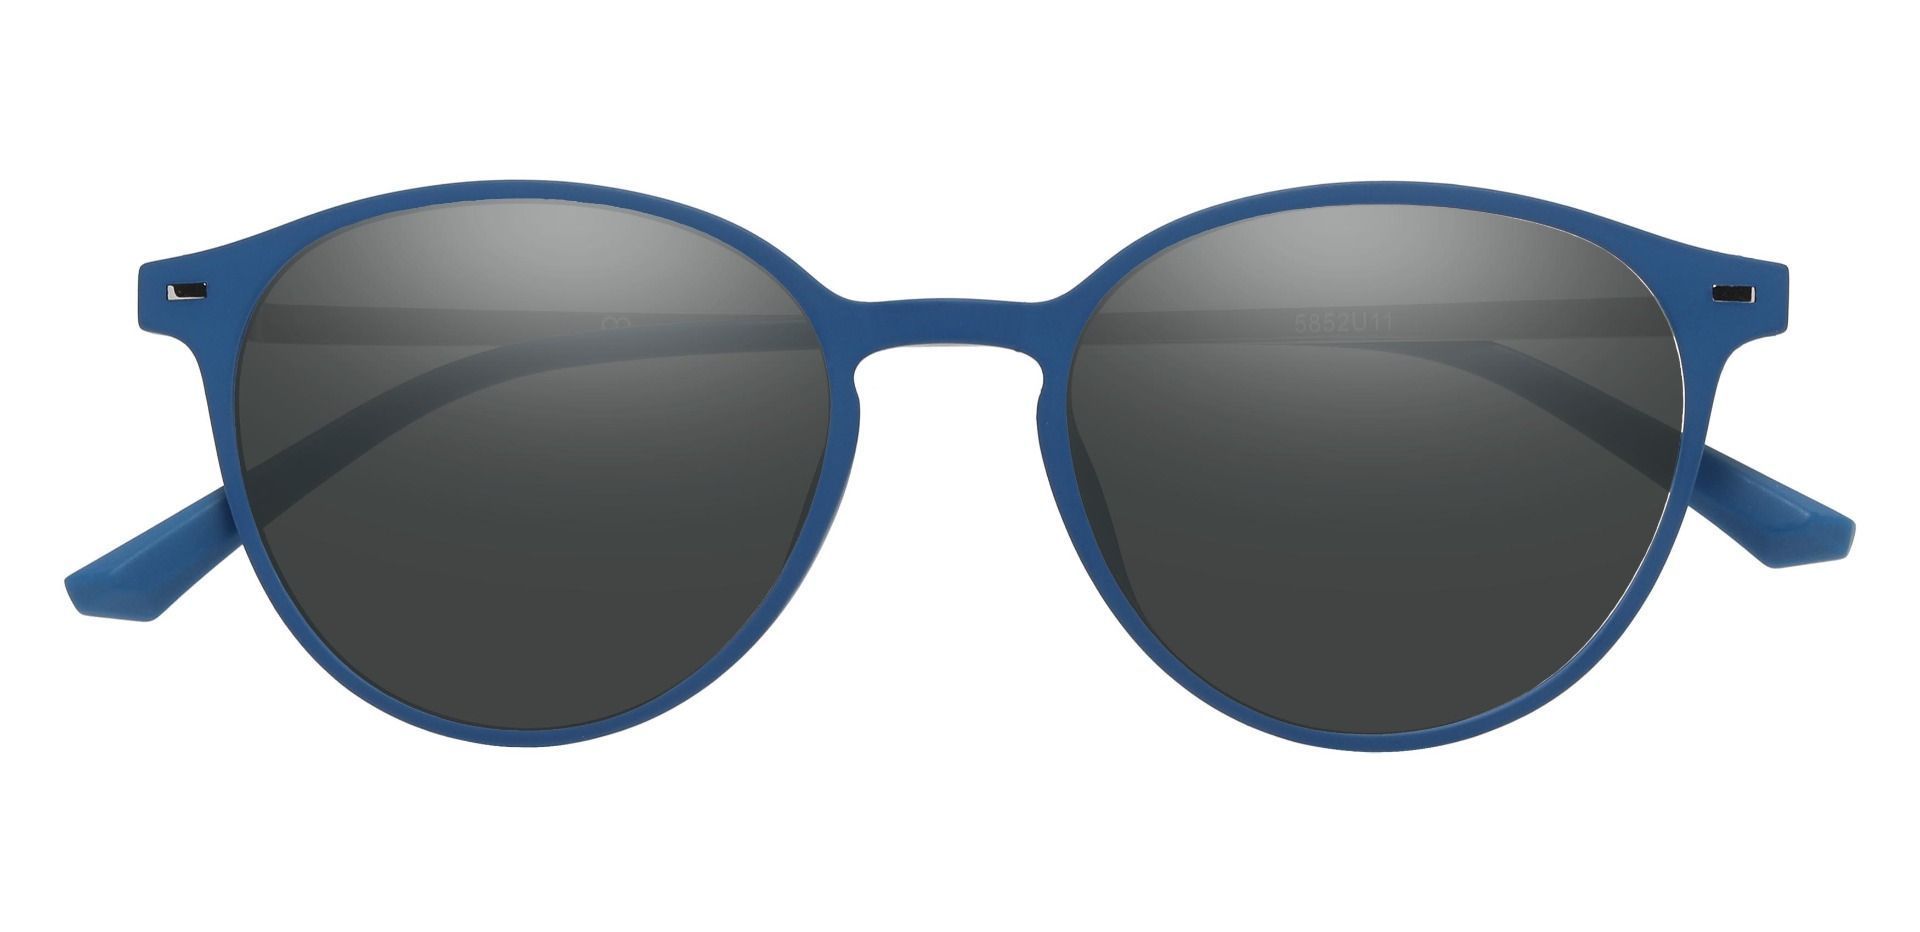 Springer Round Prescription Sunglasses - Blue Frame With Gray Lenses